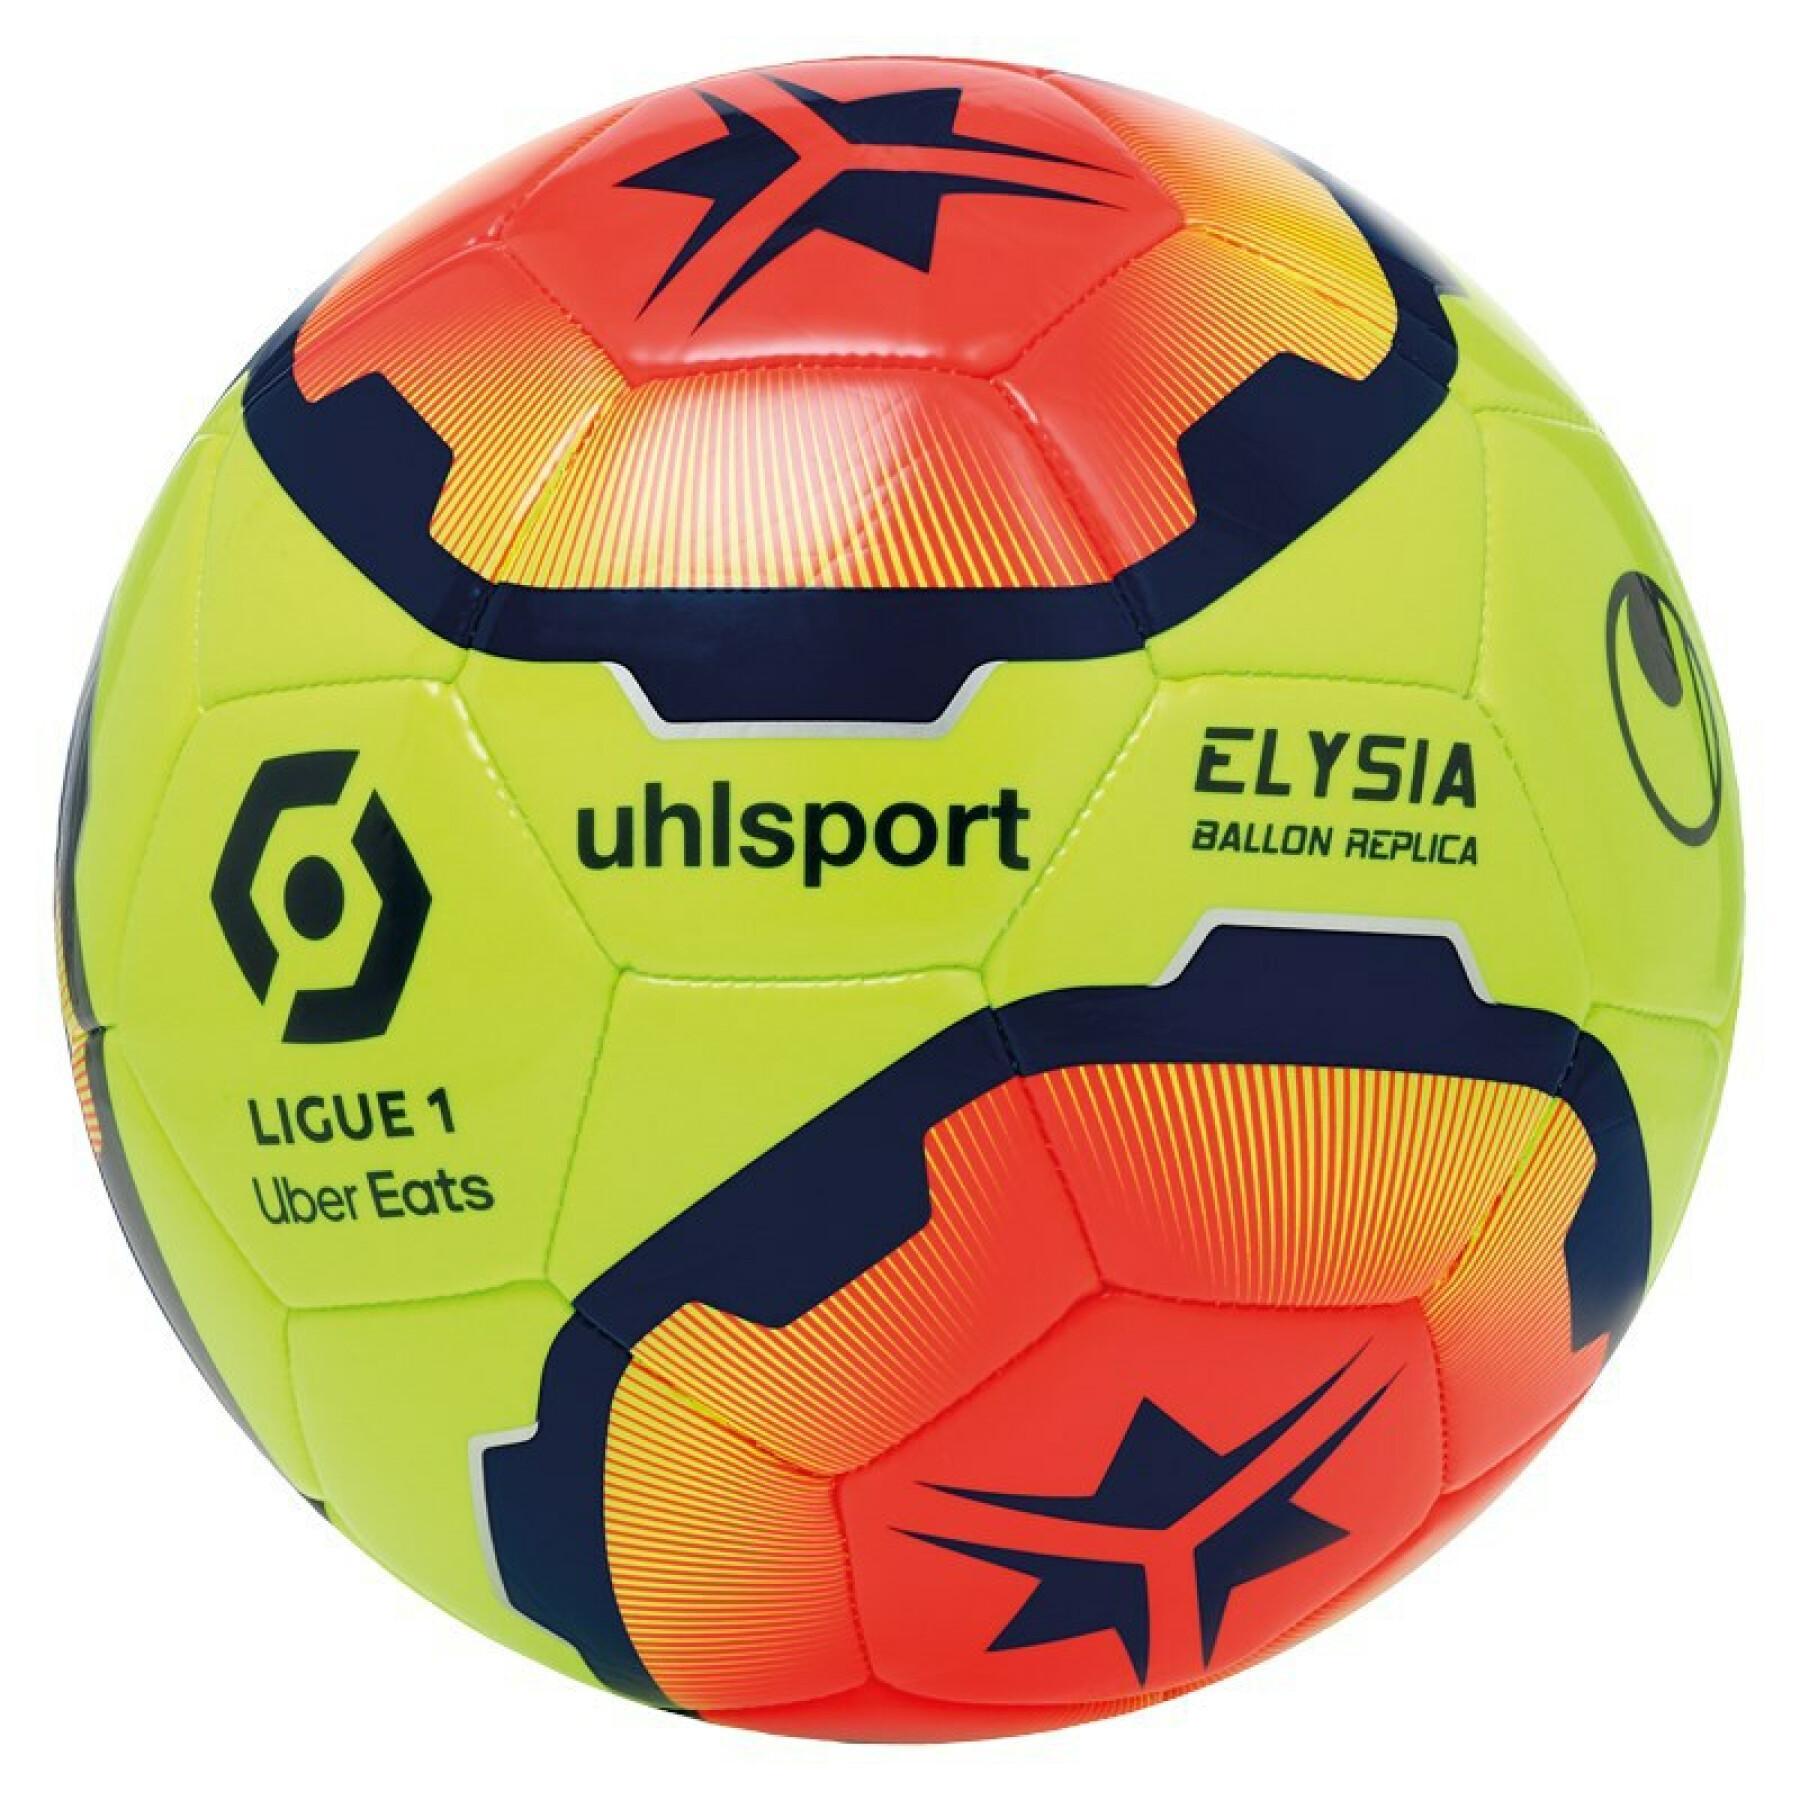 Balón Uhlsport Elysia replica